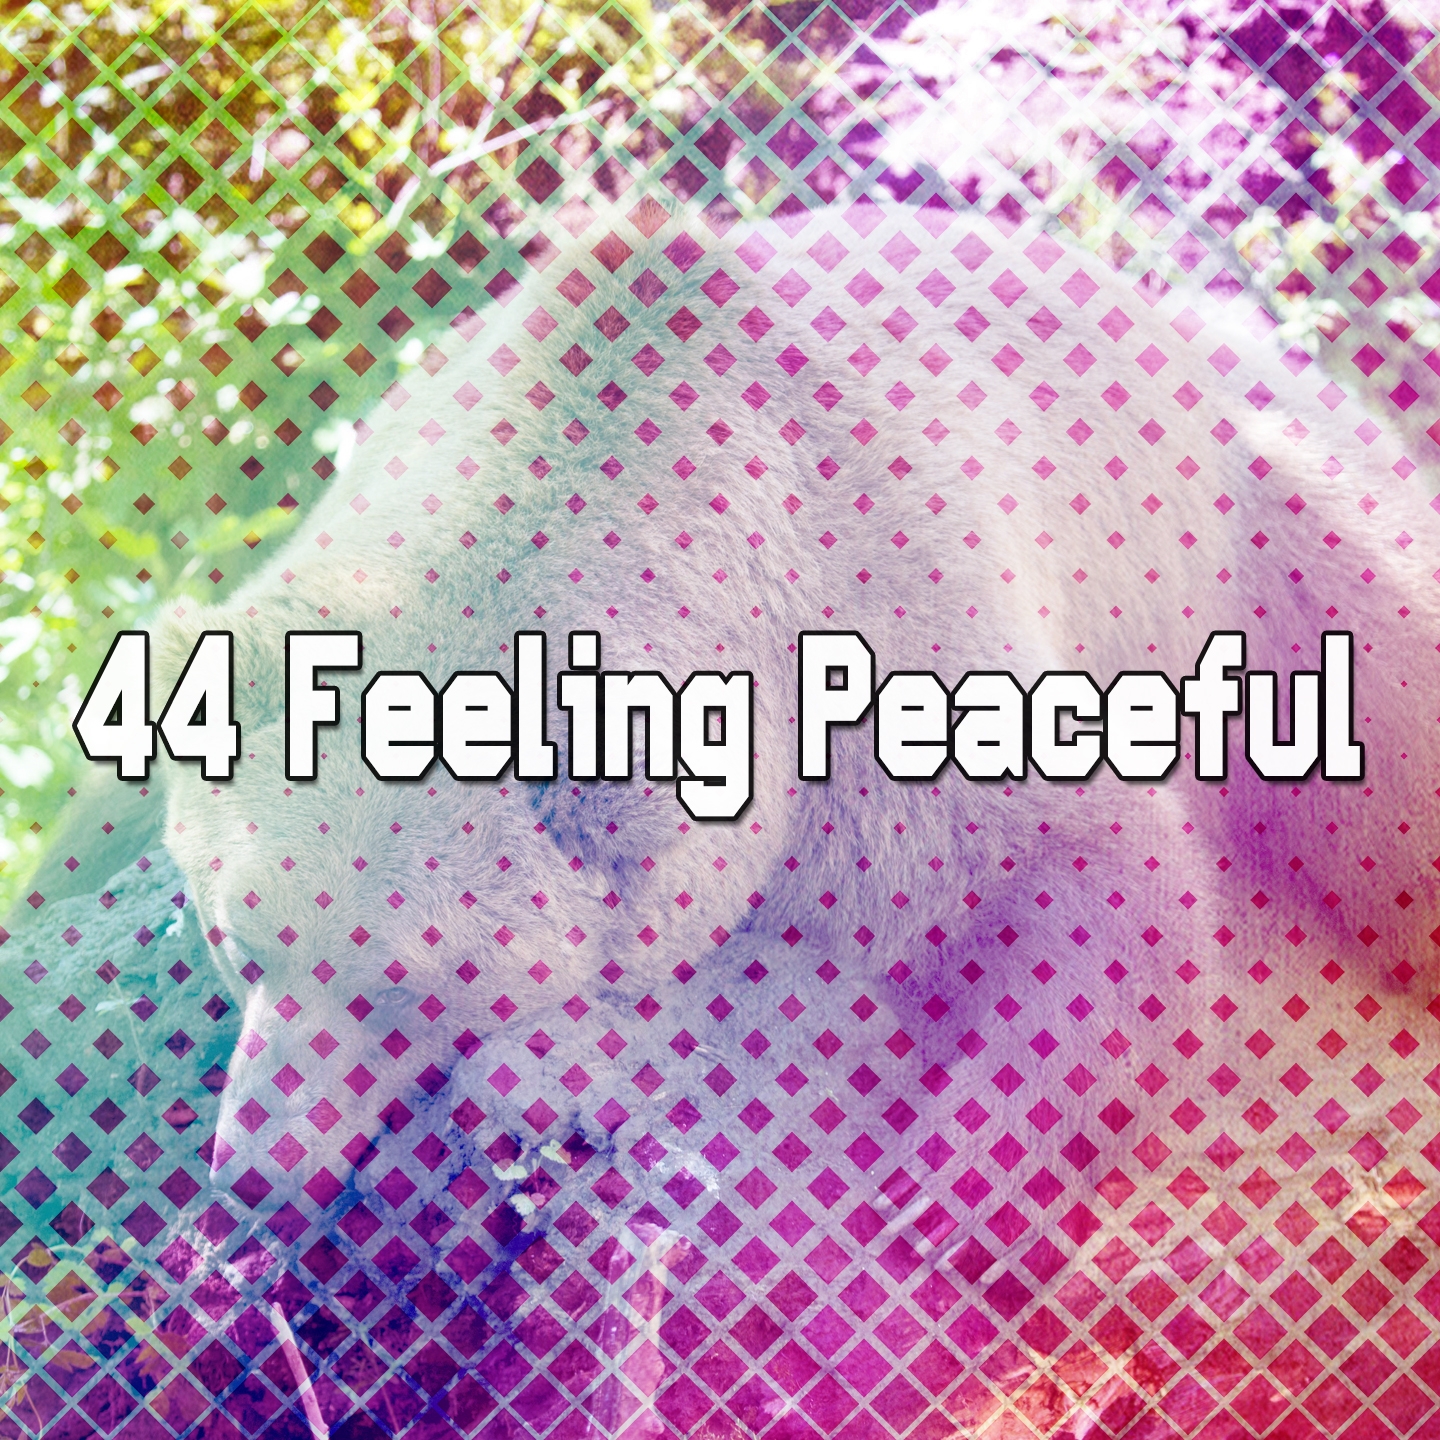 44 Feeling Peaceful